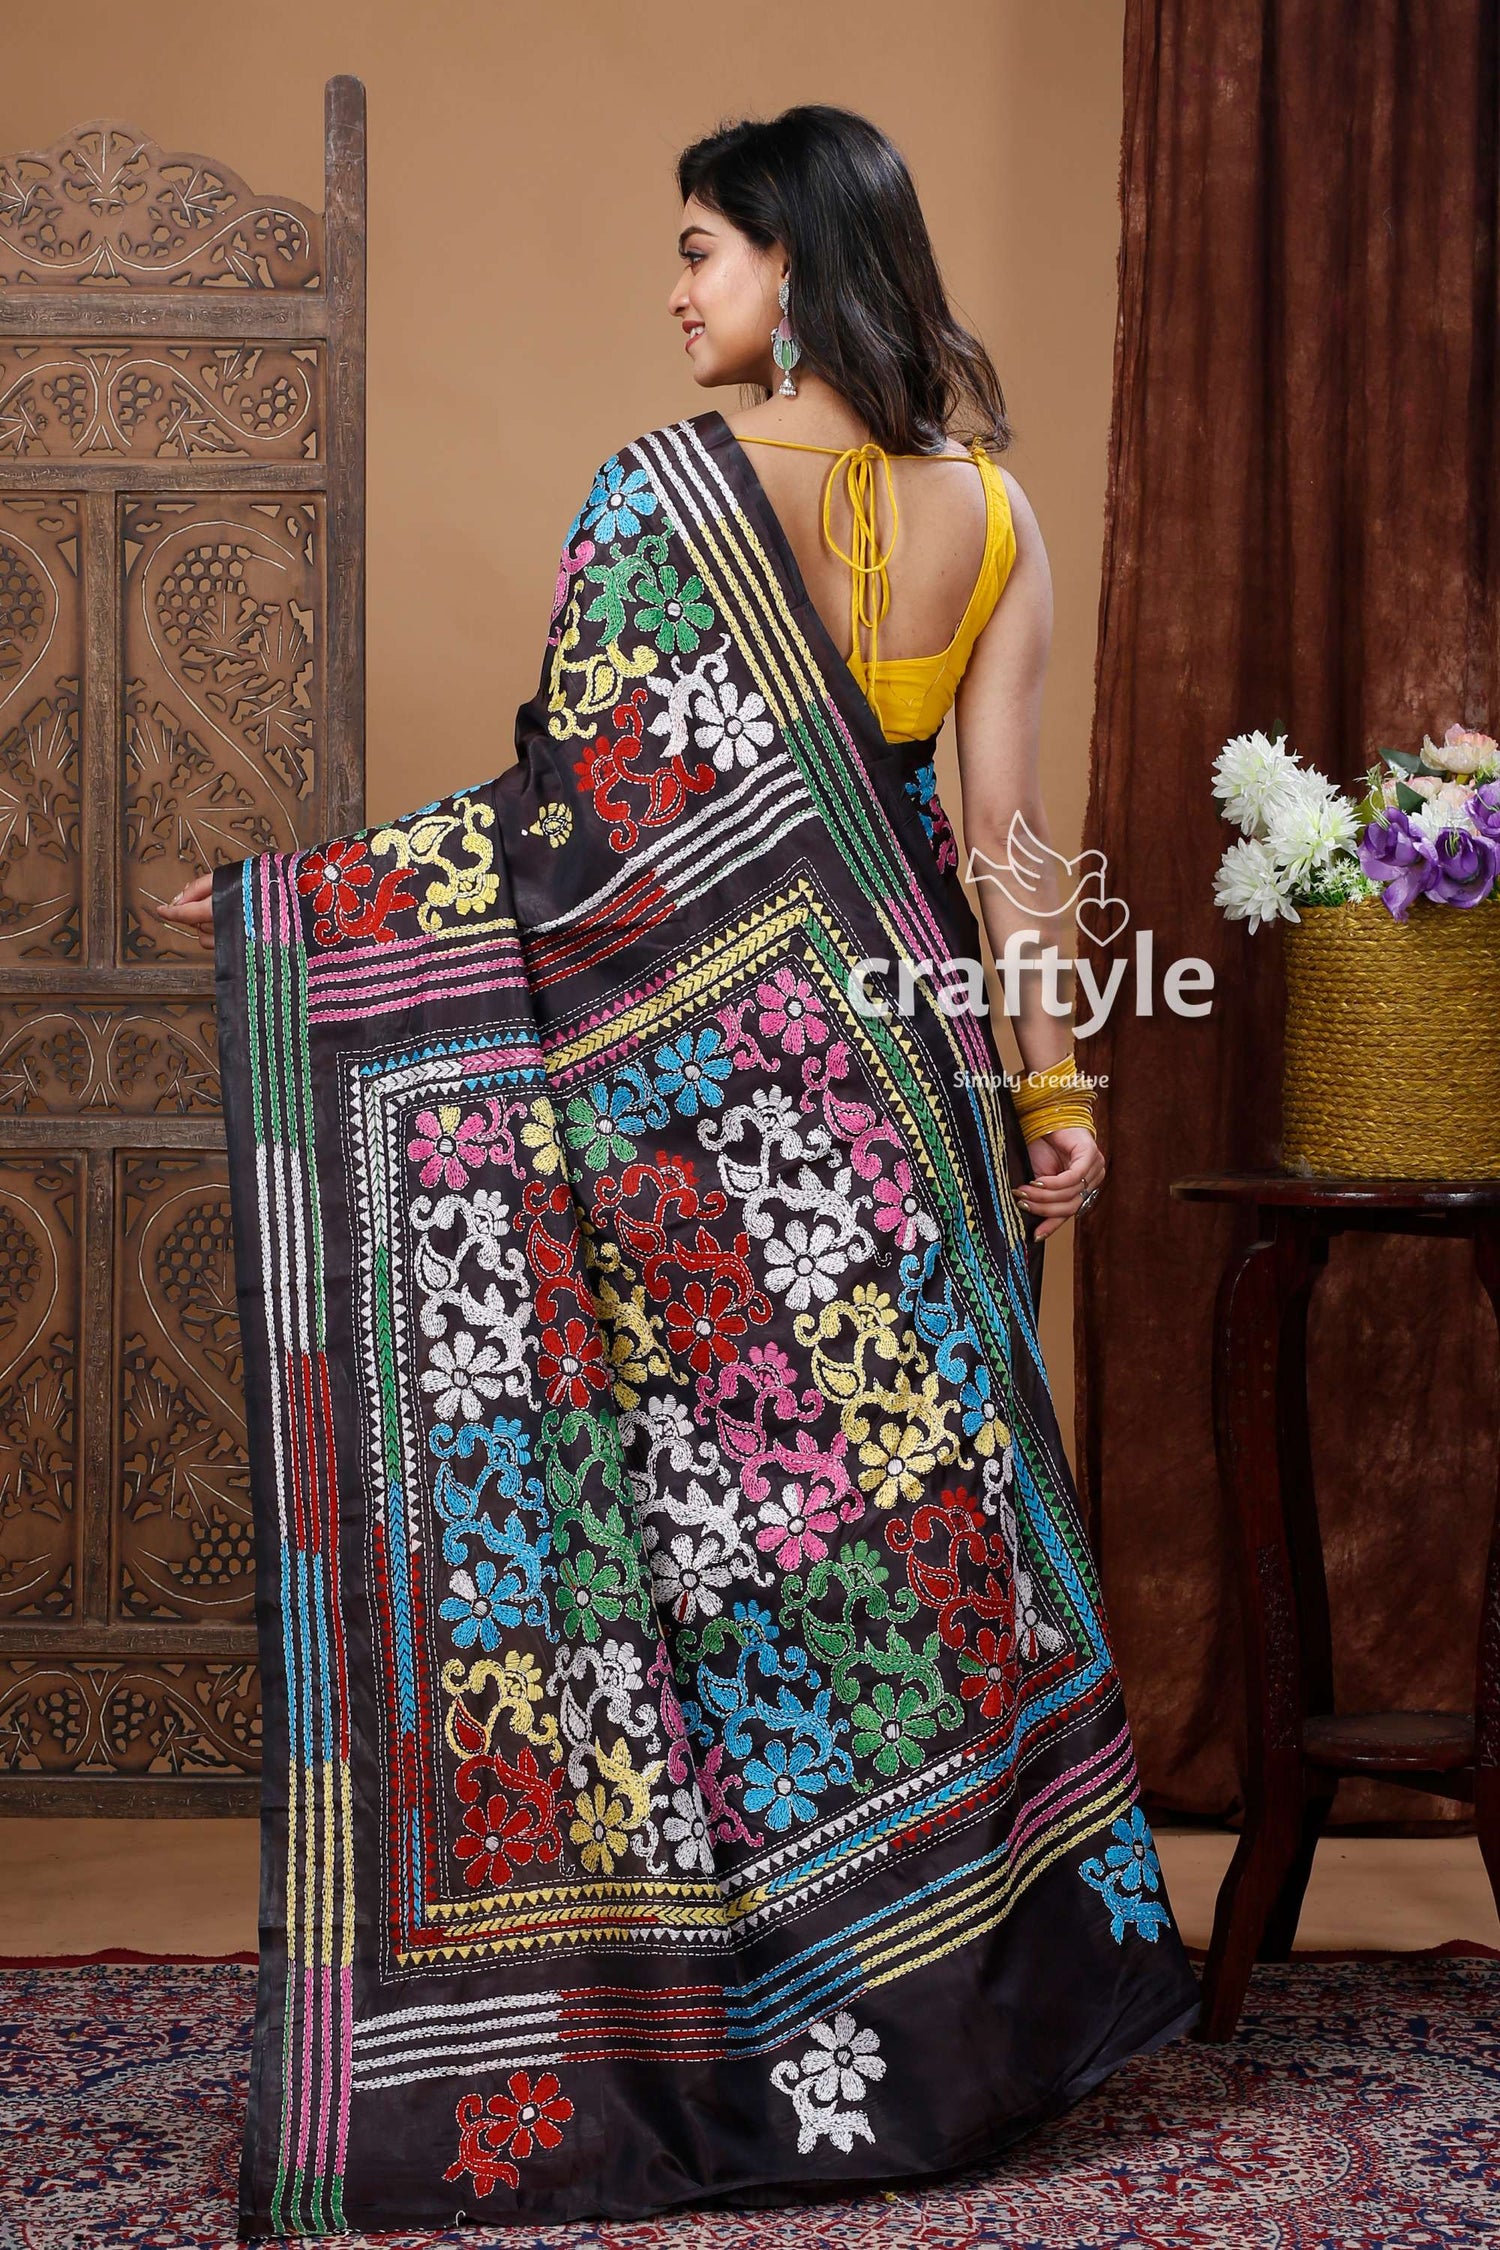 Handcrafted Floral Black Kantha Silk Saree - Santiniketan Bengal-Craftyle